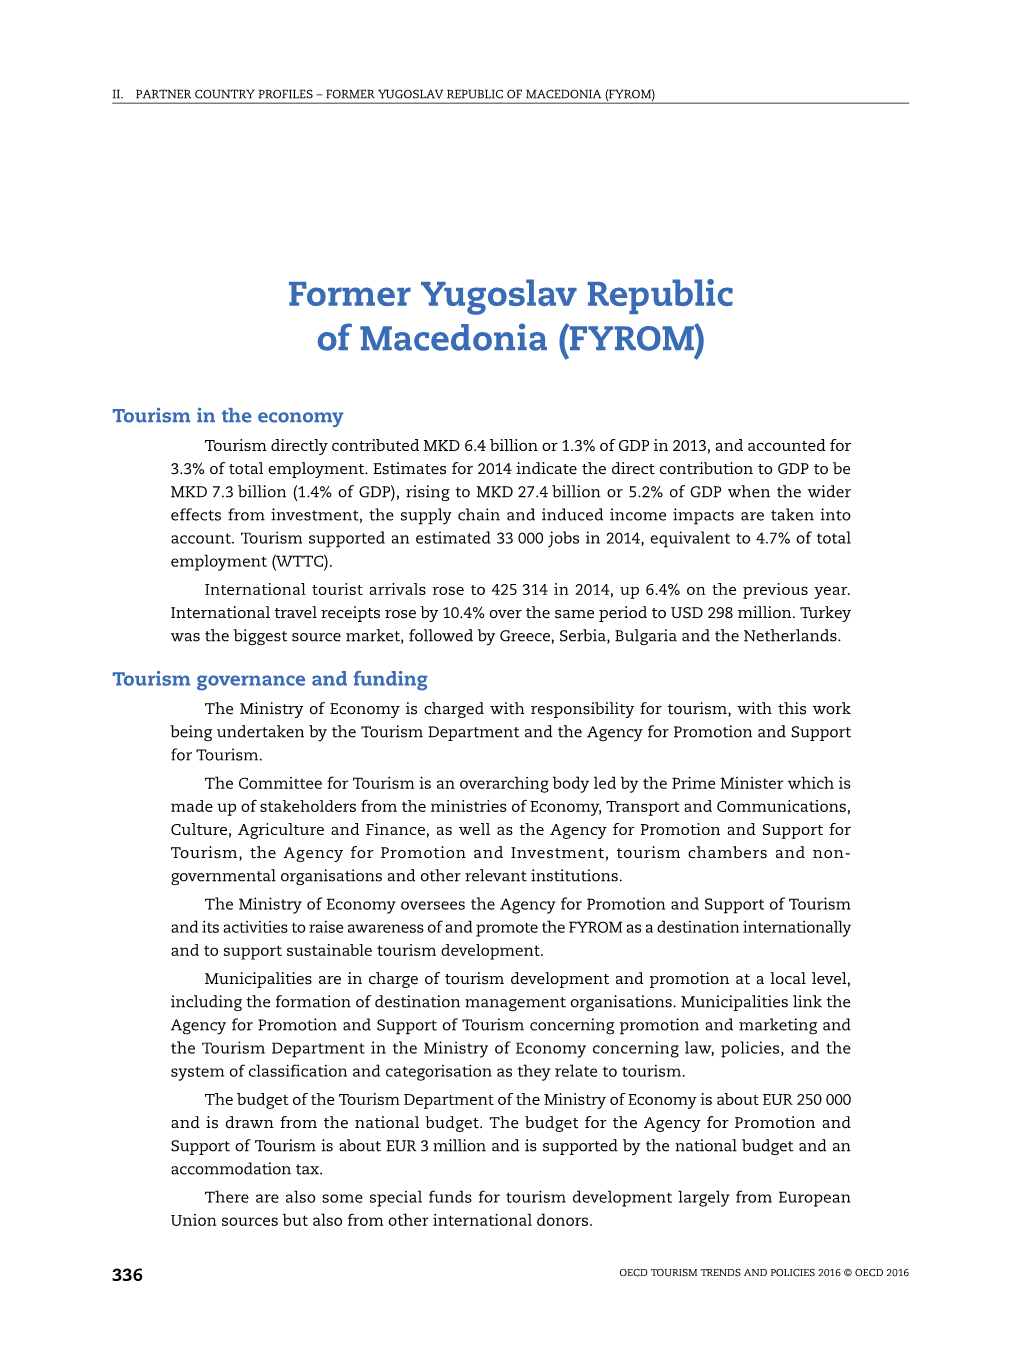 Former Yugoslav Republic of Macedonia (Fyrom)